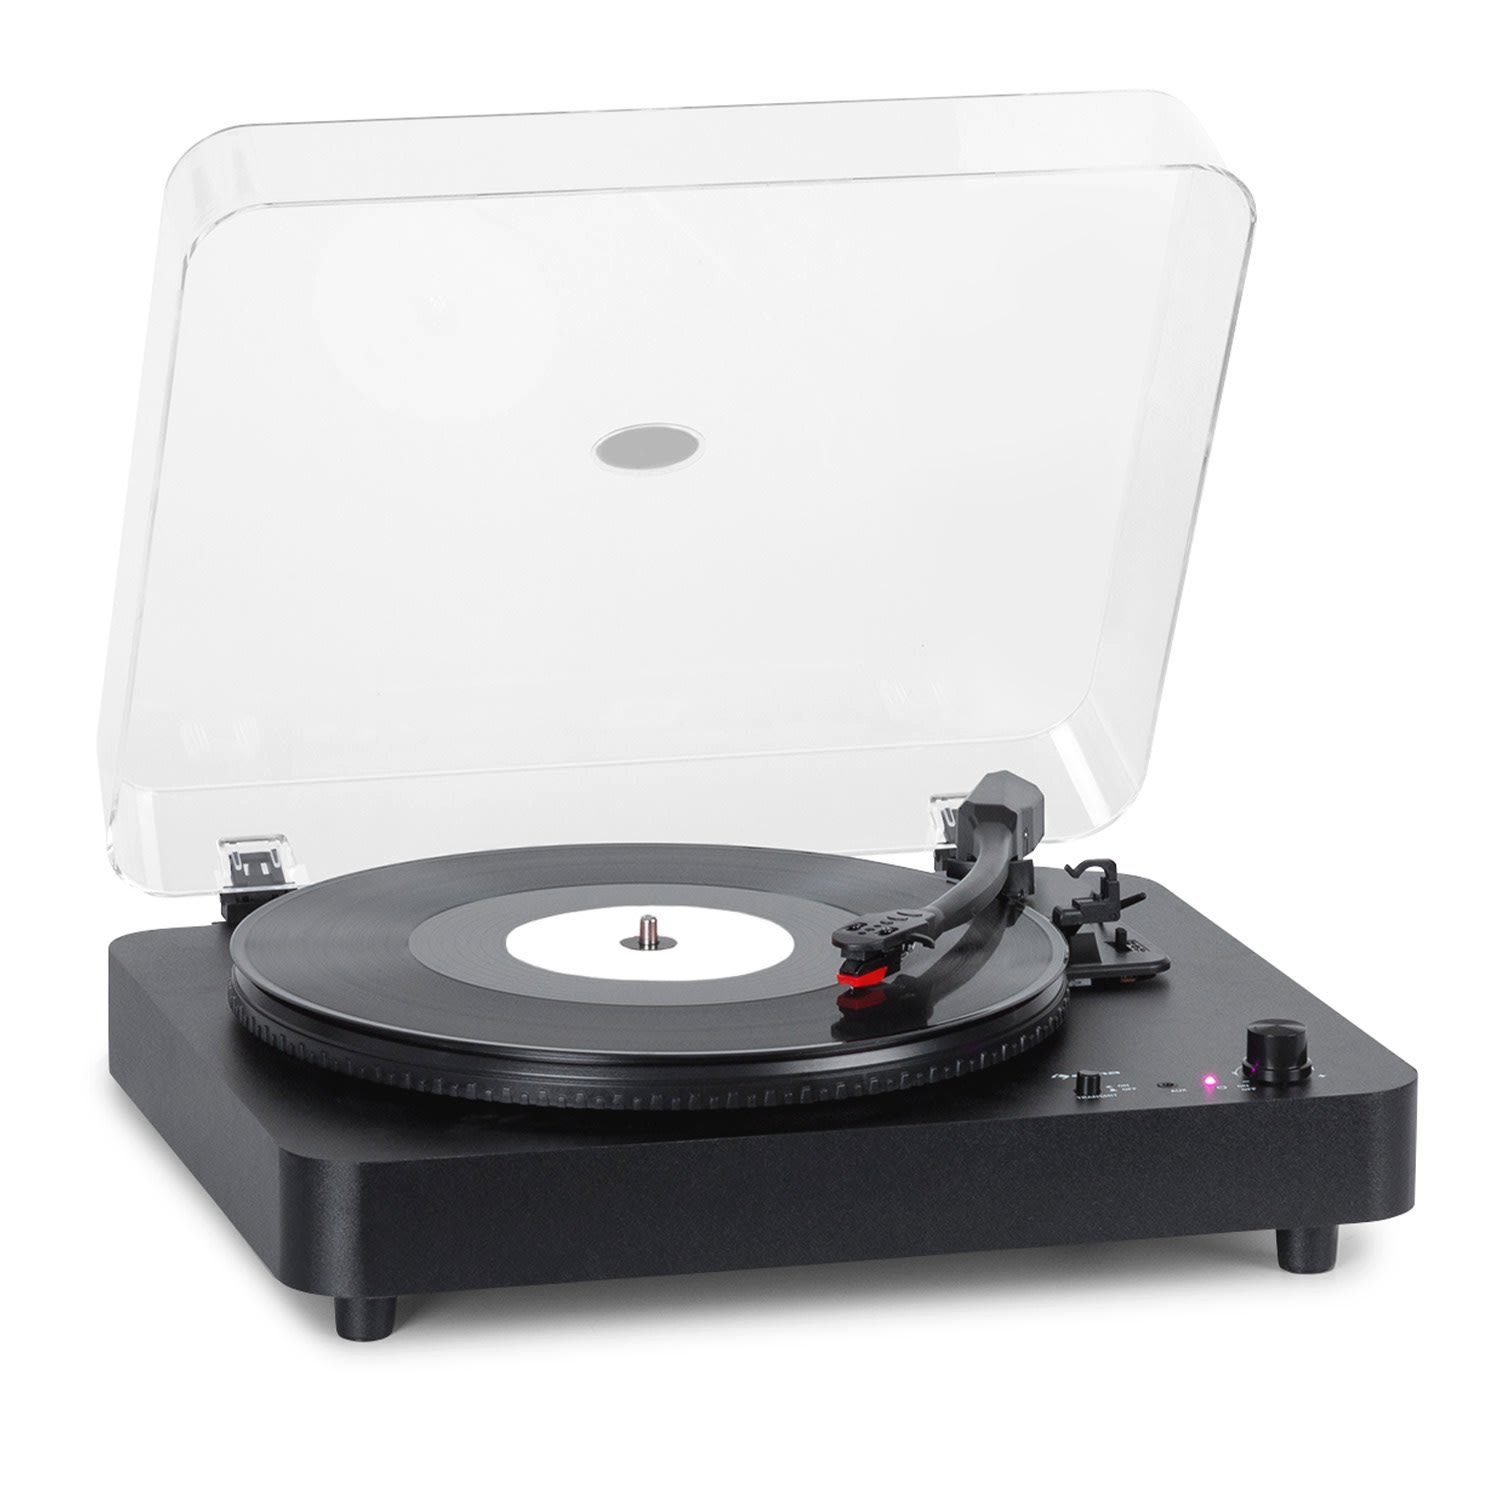 Vinyl TT-Classic (Riemenantrieb, Schallplattenspieler Plattenspieler) Lautsprecher mit Plattenspieler Light Auna Bluetooth,